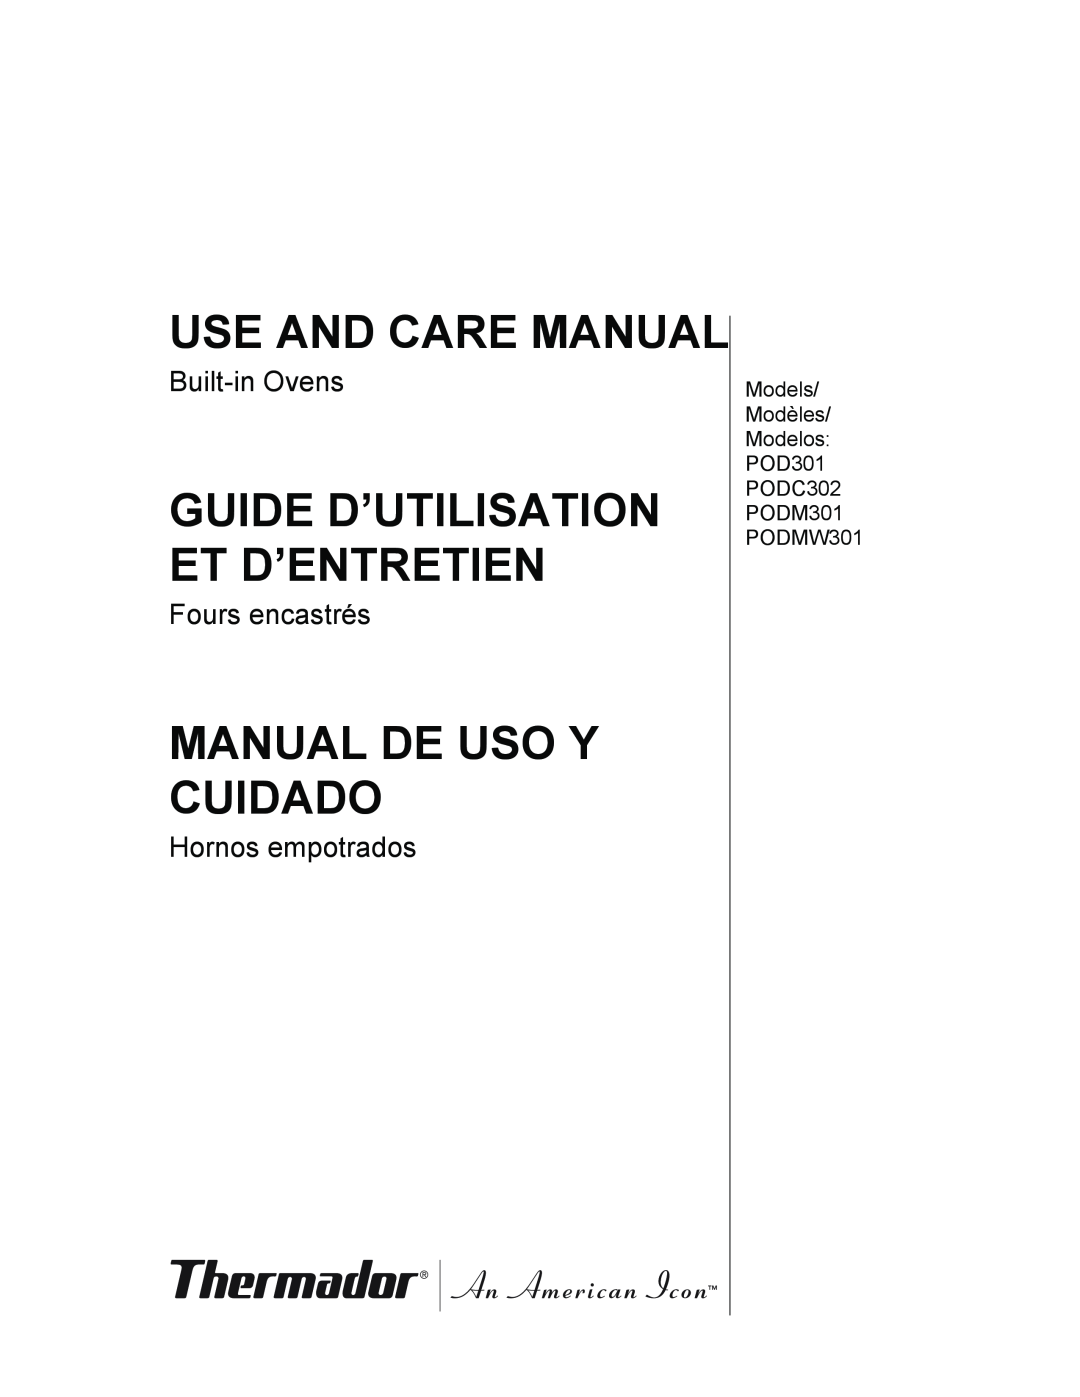 Thermador PODMW301 manual Use And Care Manual, Guide D’Utilisation Et D’Entretien, Manual De Uso Y Cuidado, Built-inOvens 